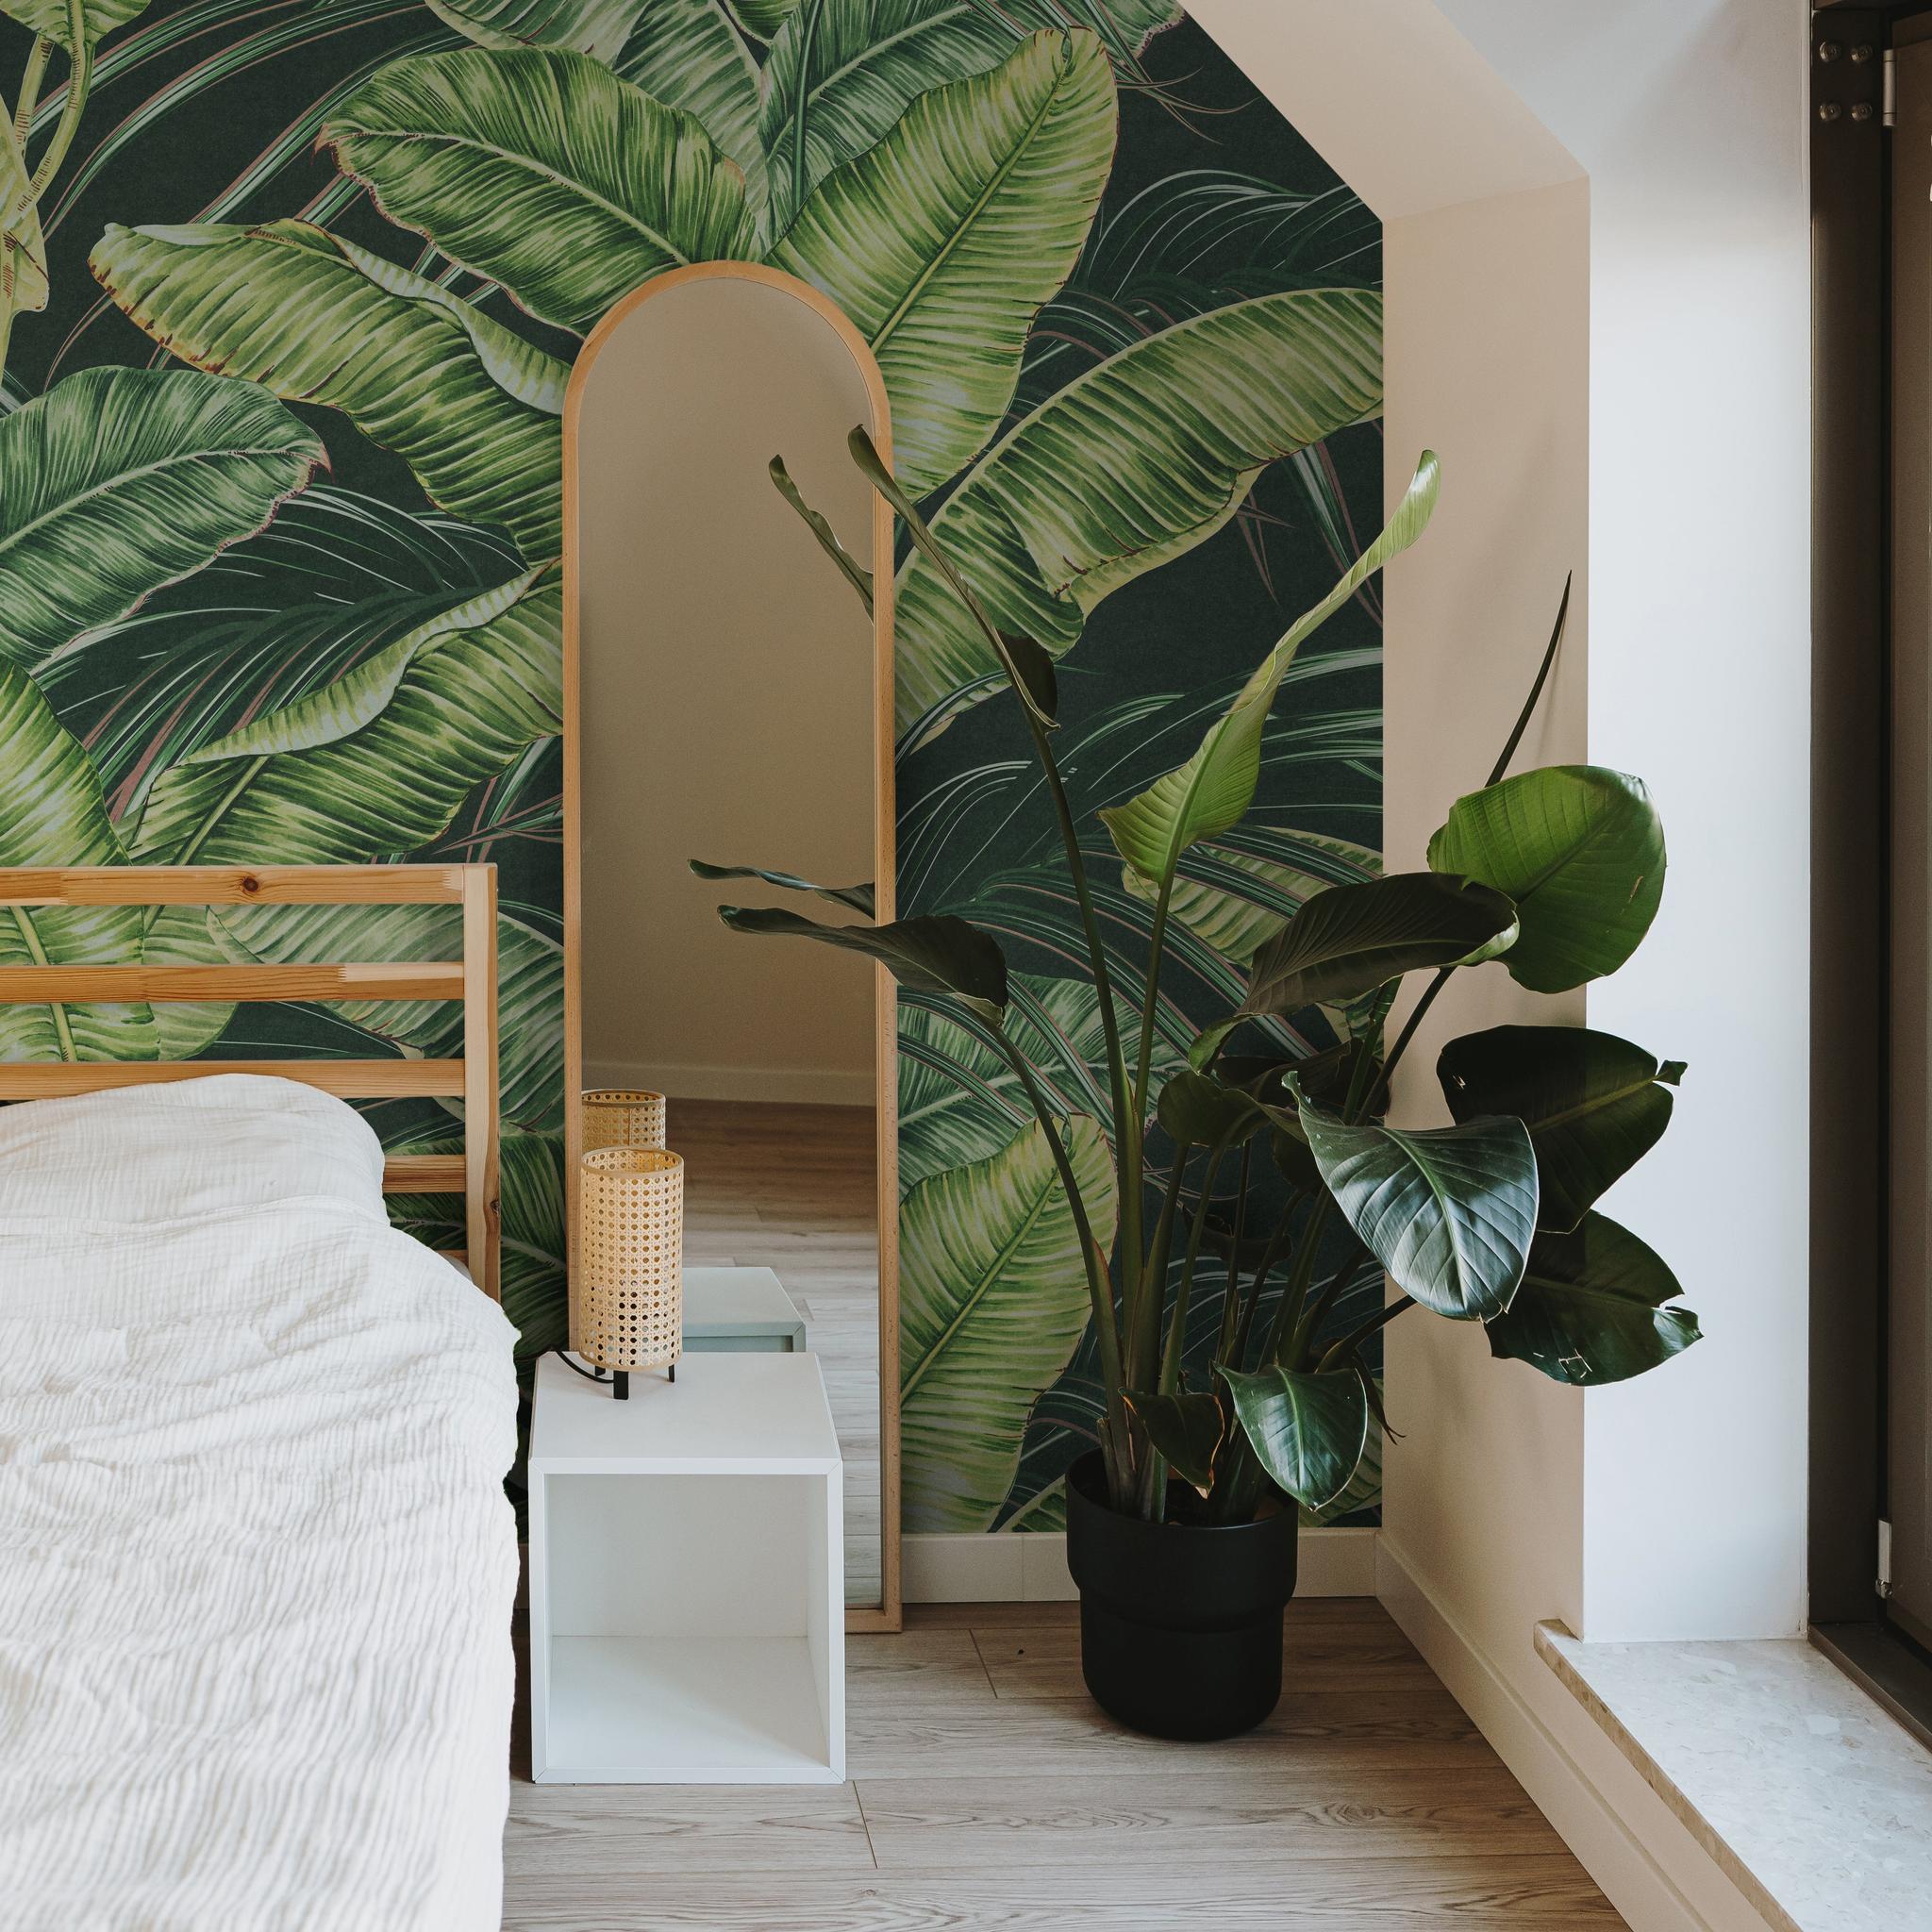 "Wall Blush Sterlitzia Wallpaper in a modern bedroom highlighting lush tropical design focus."